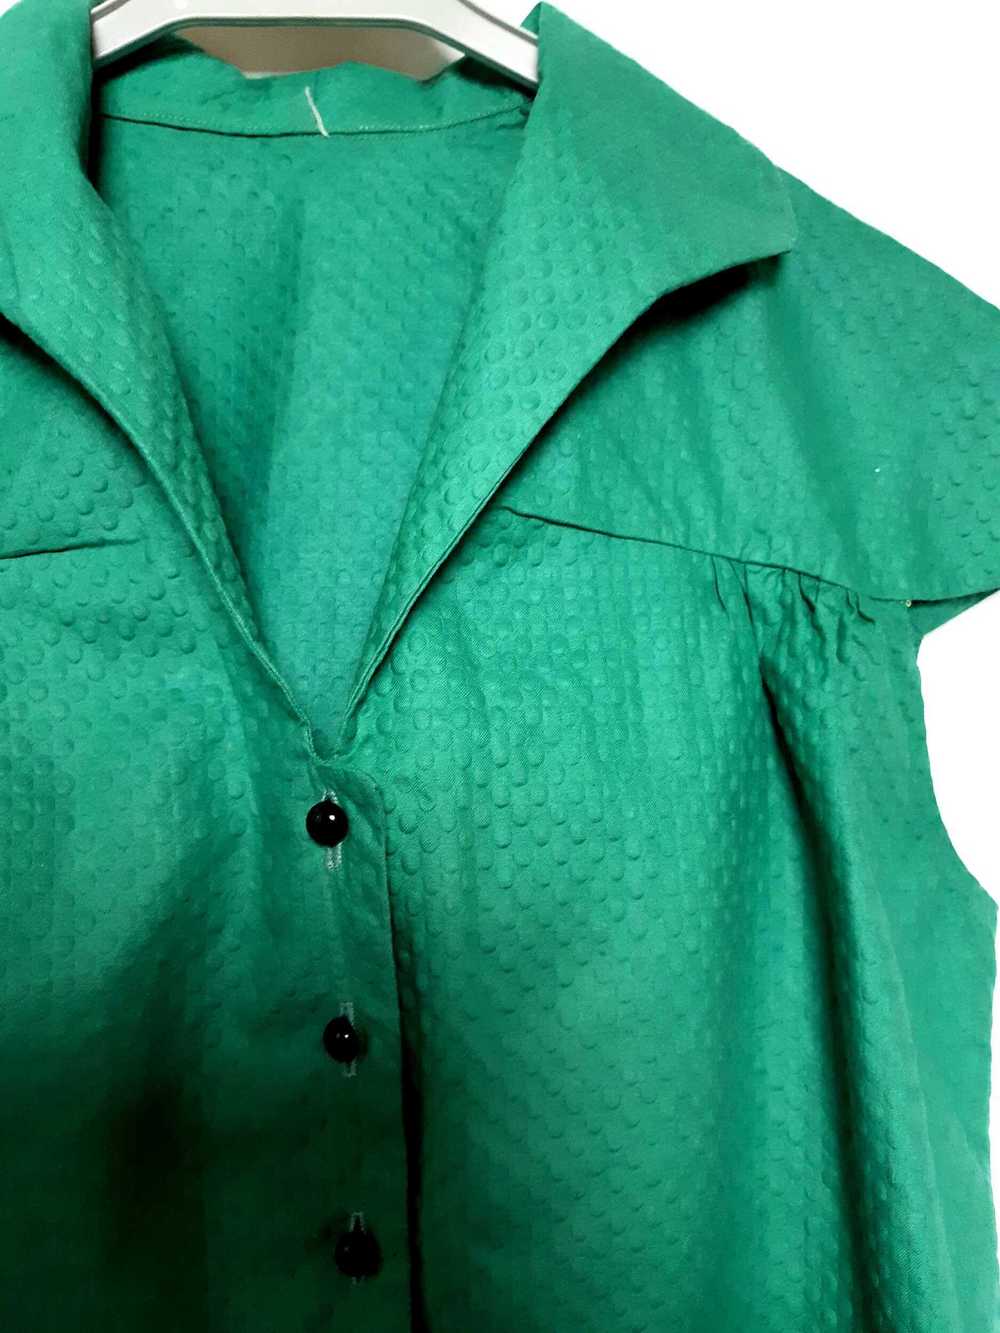 Cotton shirt - Embossed cotton shirt, emerald gre… - image 2